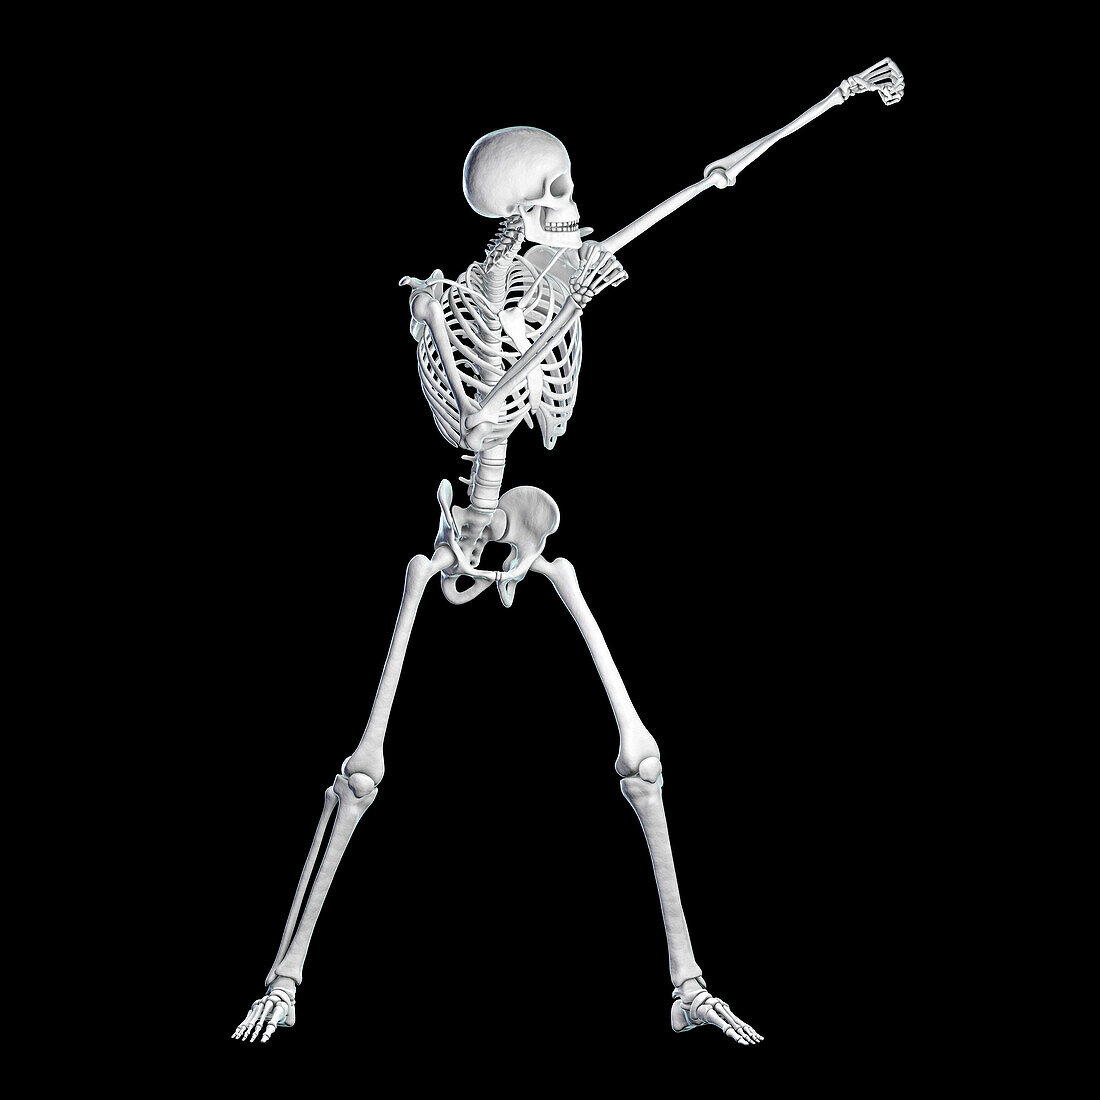 Skeleton boxing, illustration